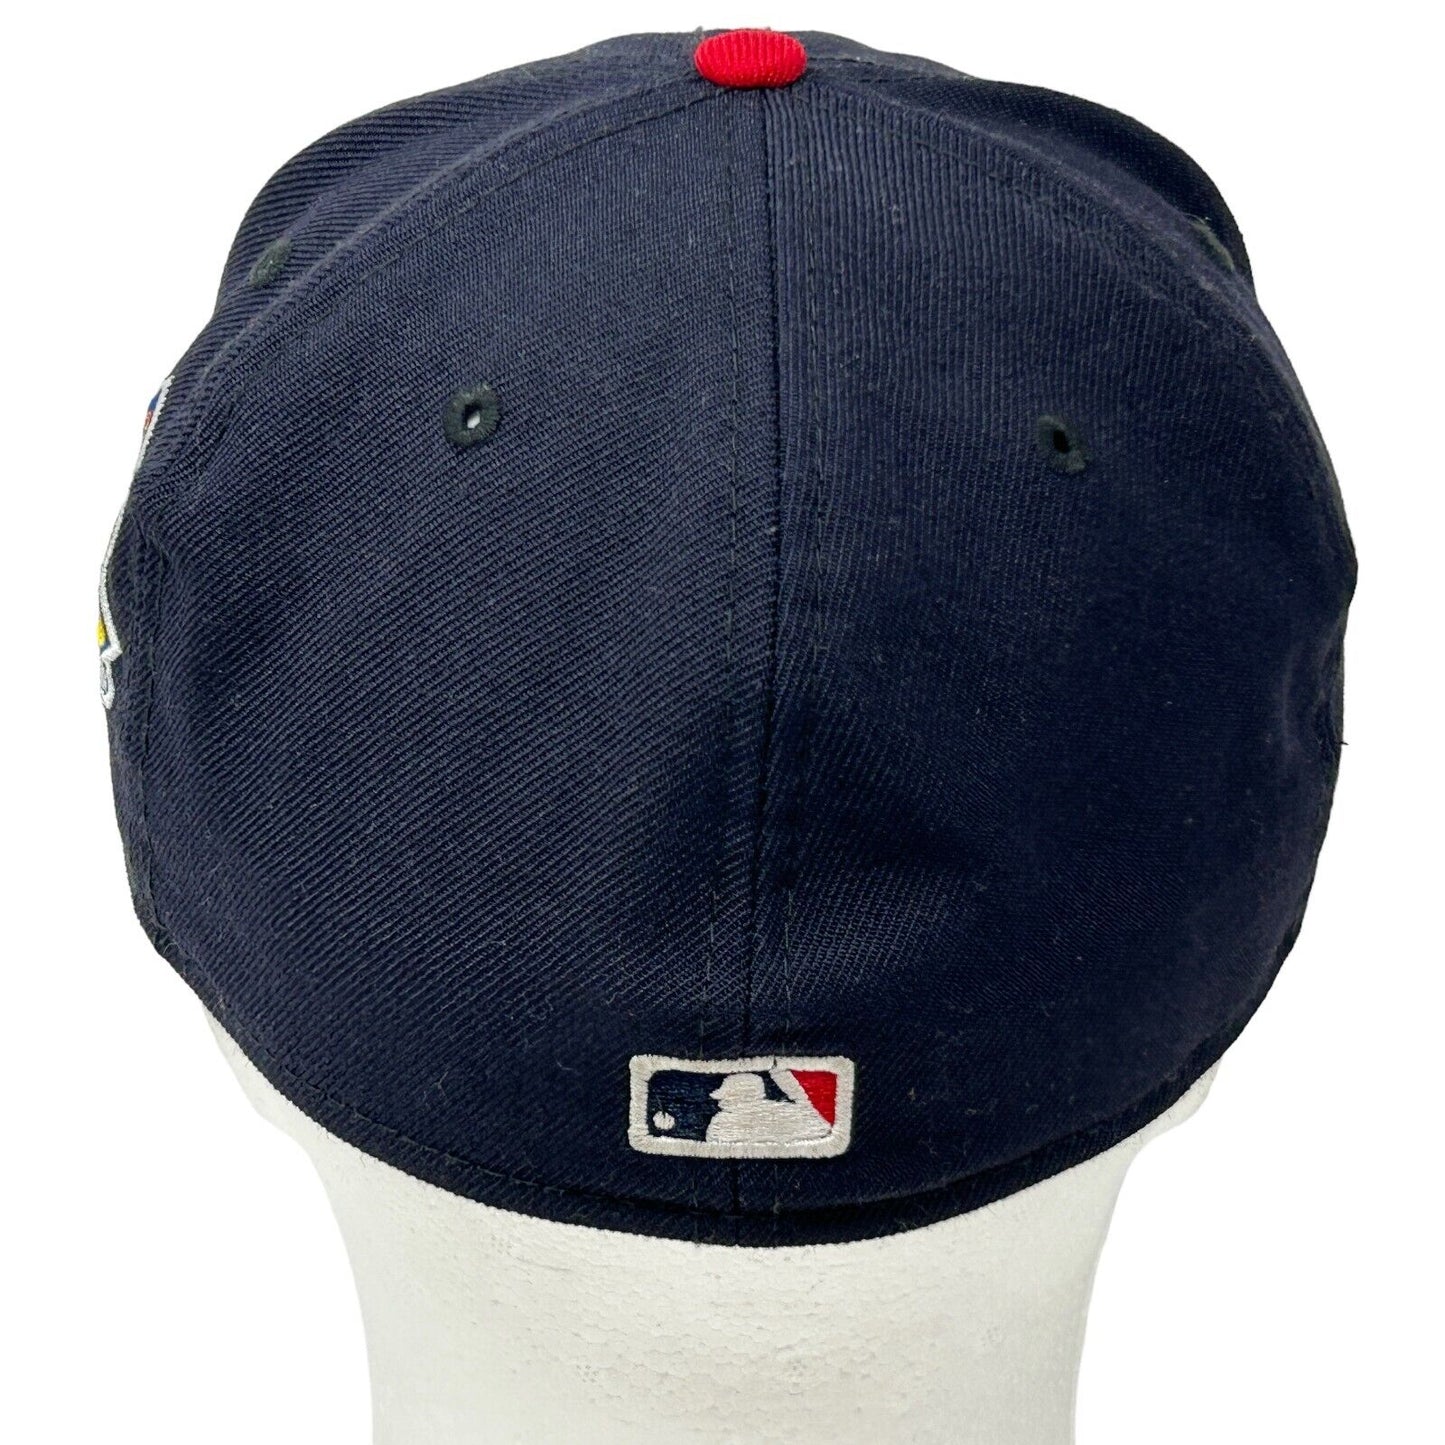 Atlanta Braves 1999 World Series Hat Vintage 90s Blue New Era Baseball Cap 7 1/4